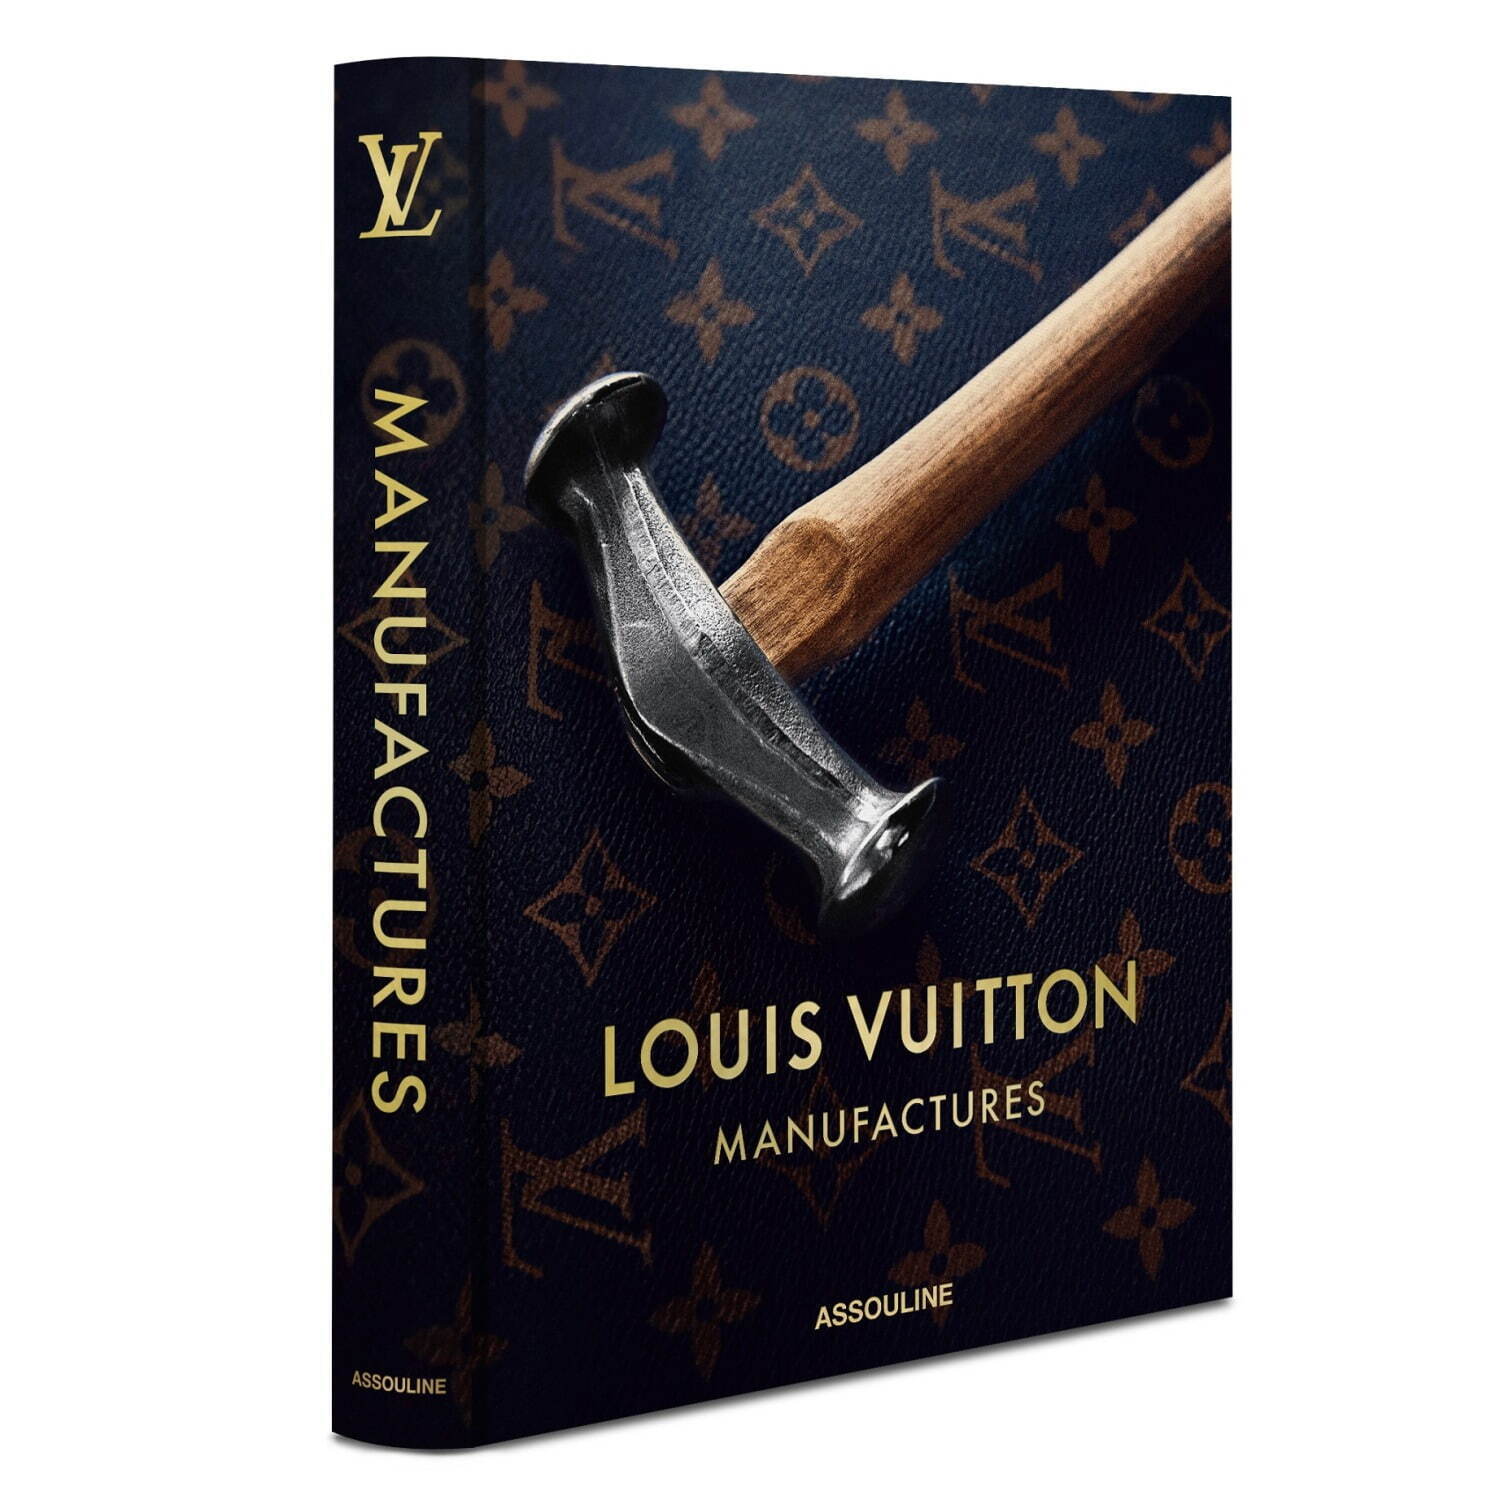 © Louis Vuitton Malletier
Assouline Spring 2022 Classics Collection